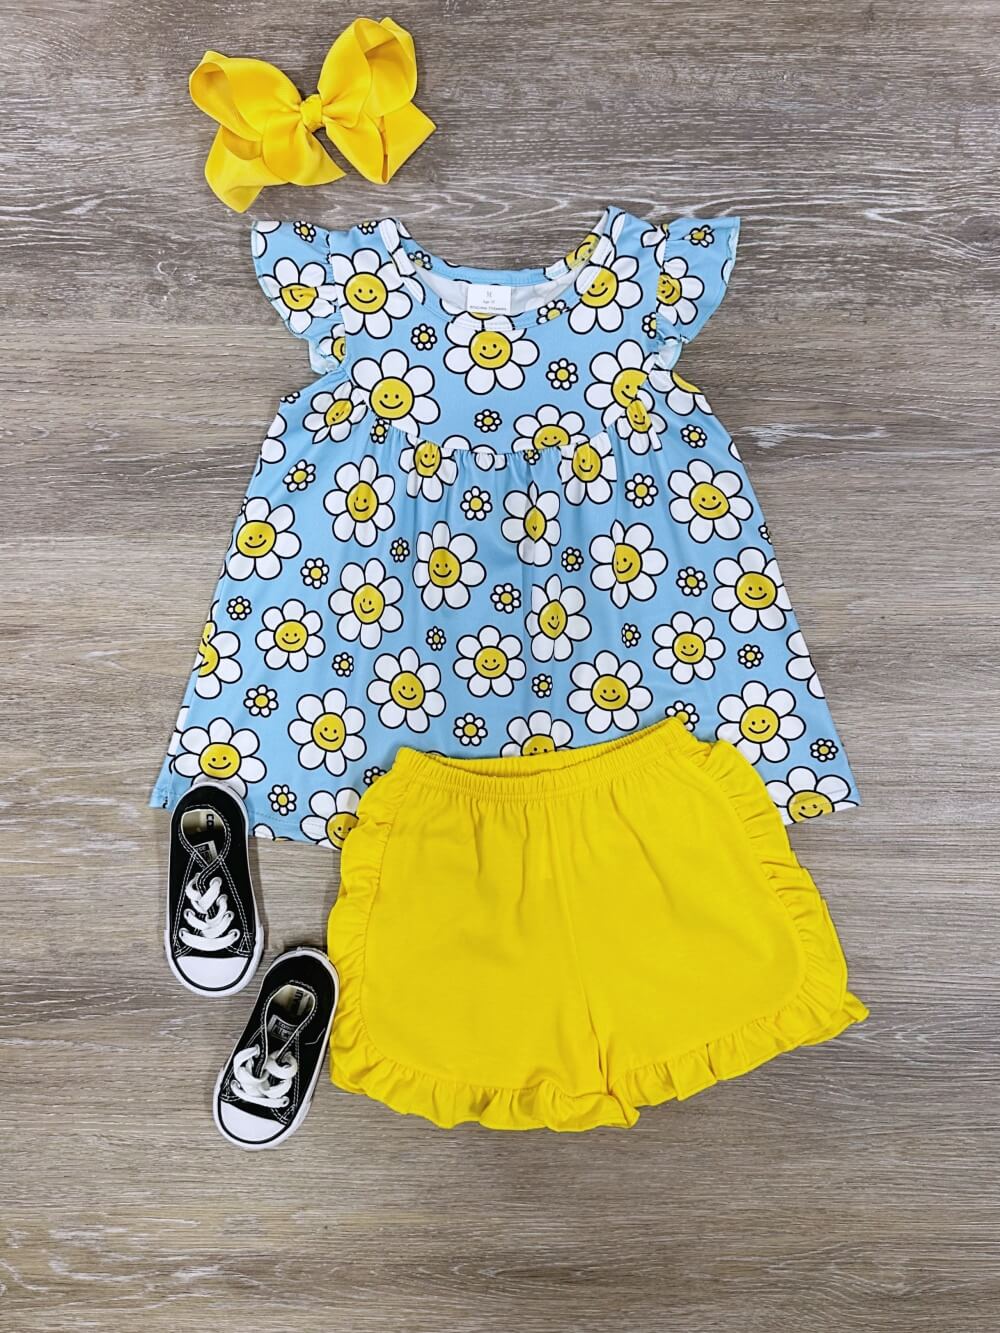 Retro Daisy Days Blue & Yellow Girls Ruffle Shorts Outfit